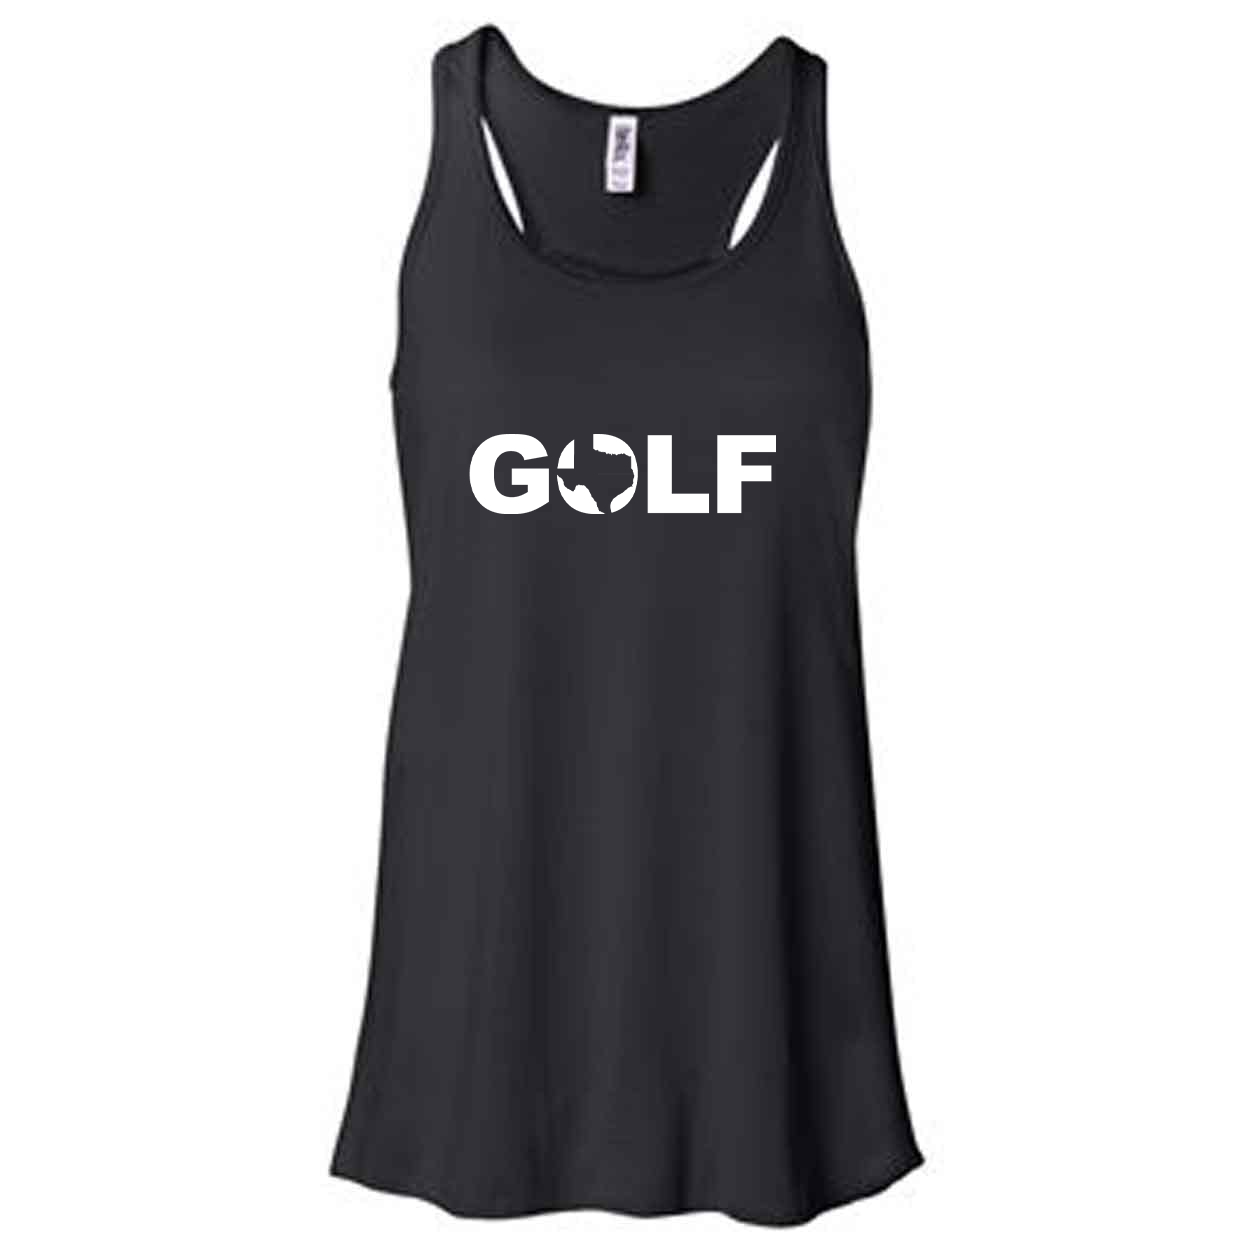 Golf Texas Classic Women's Flowy Racerback Tank Top Black (White Logo)